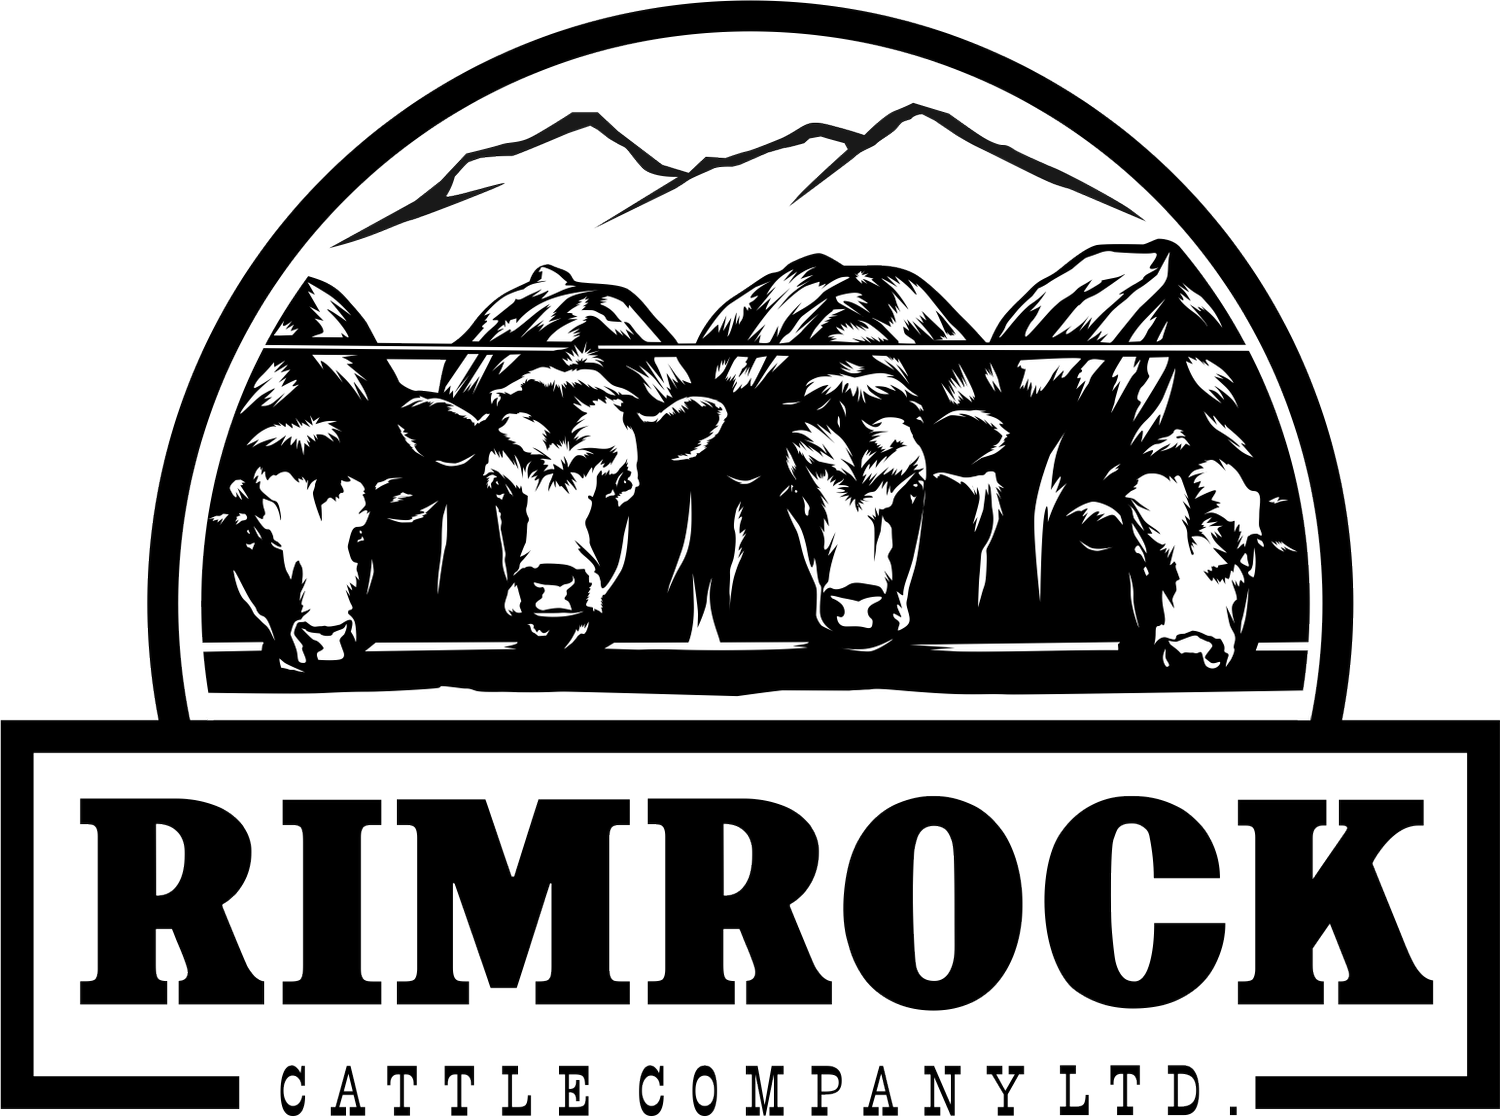 Rimrock Cattle Company Ltd